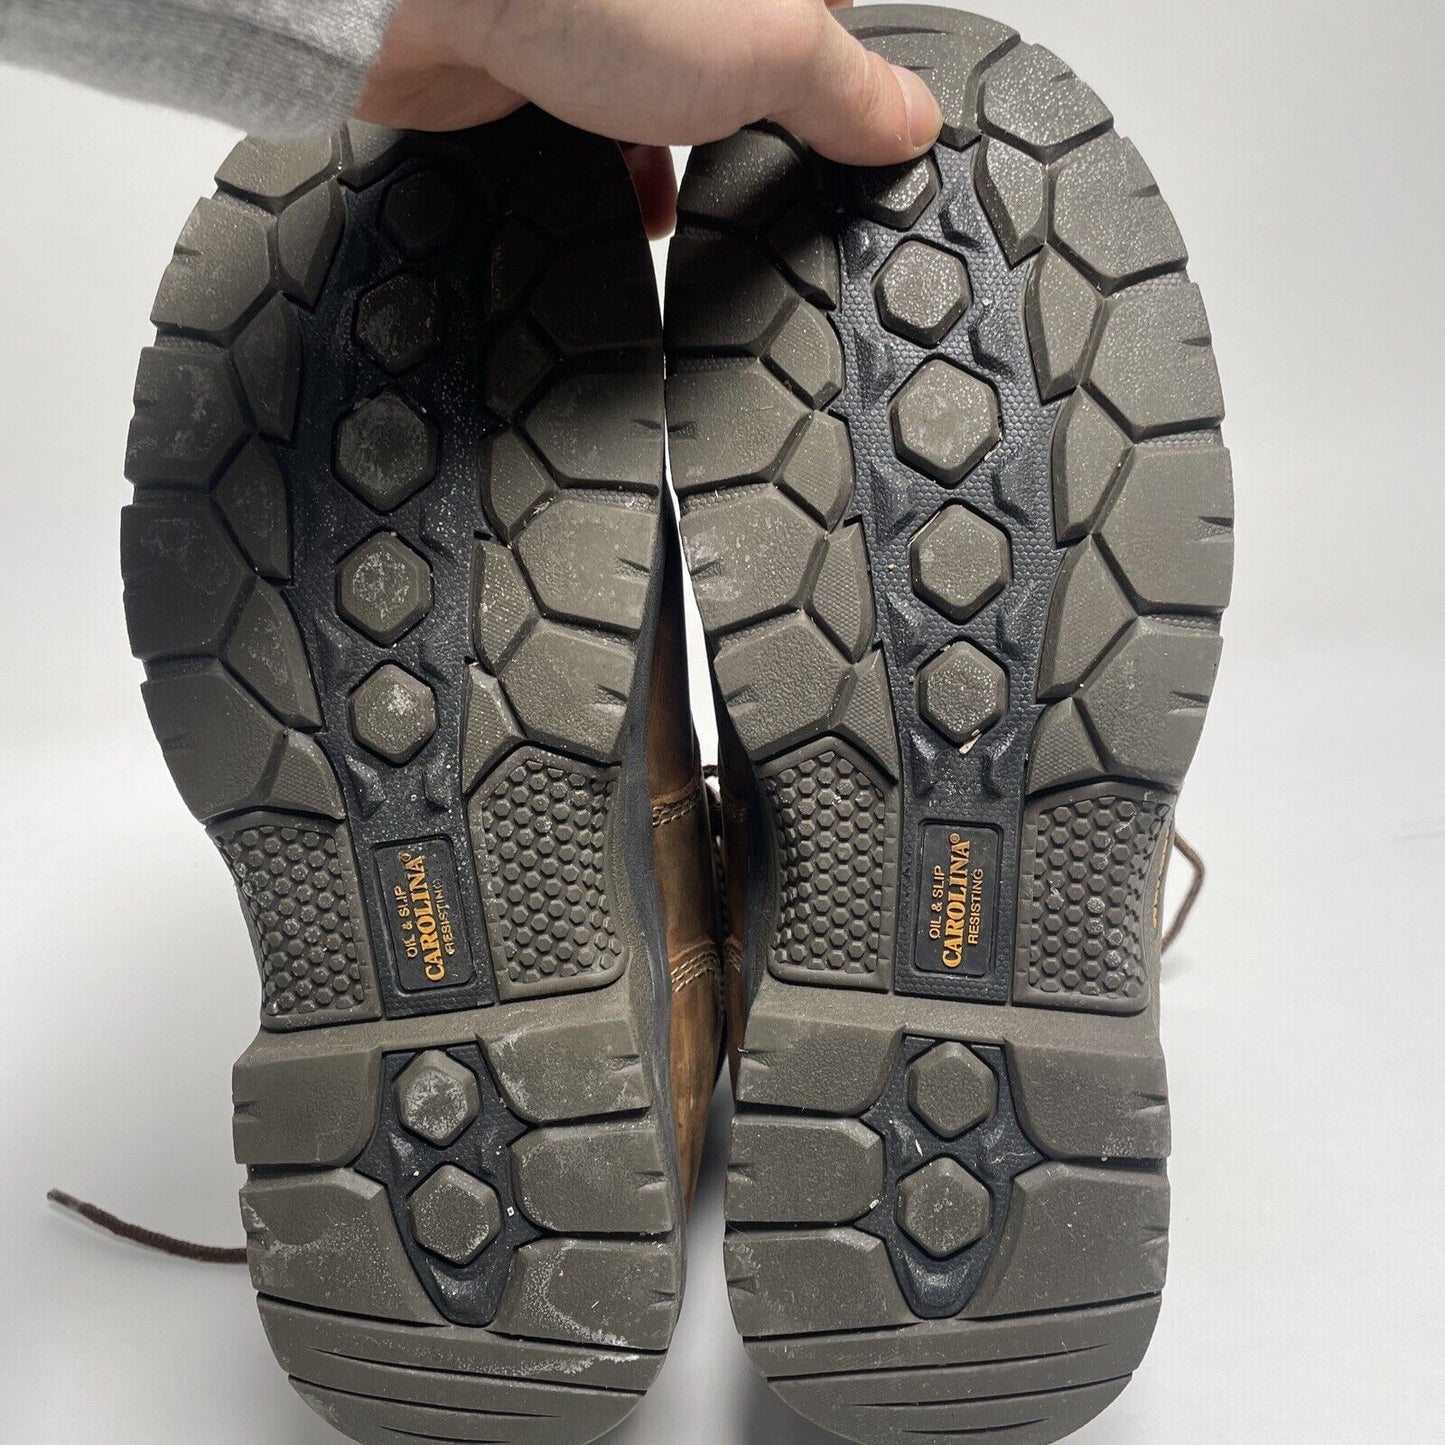 Carolina Bruno Lo CA5520 6” Men’s Composite Toe Waterproof  Size 13